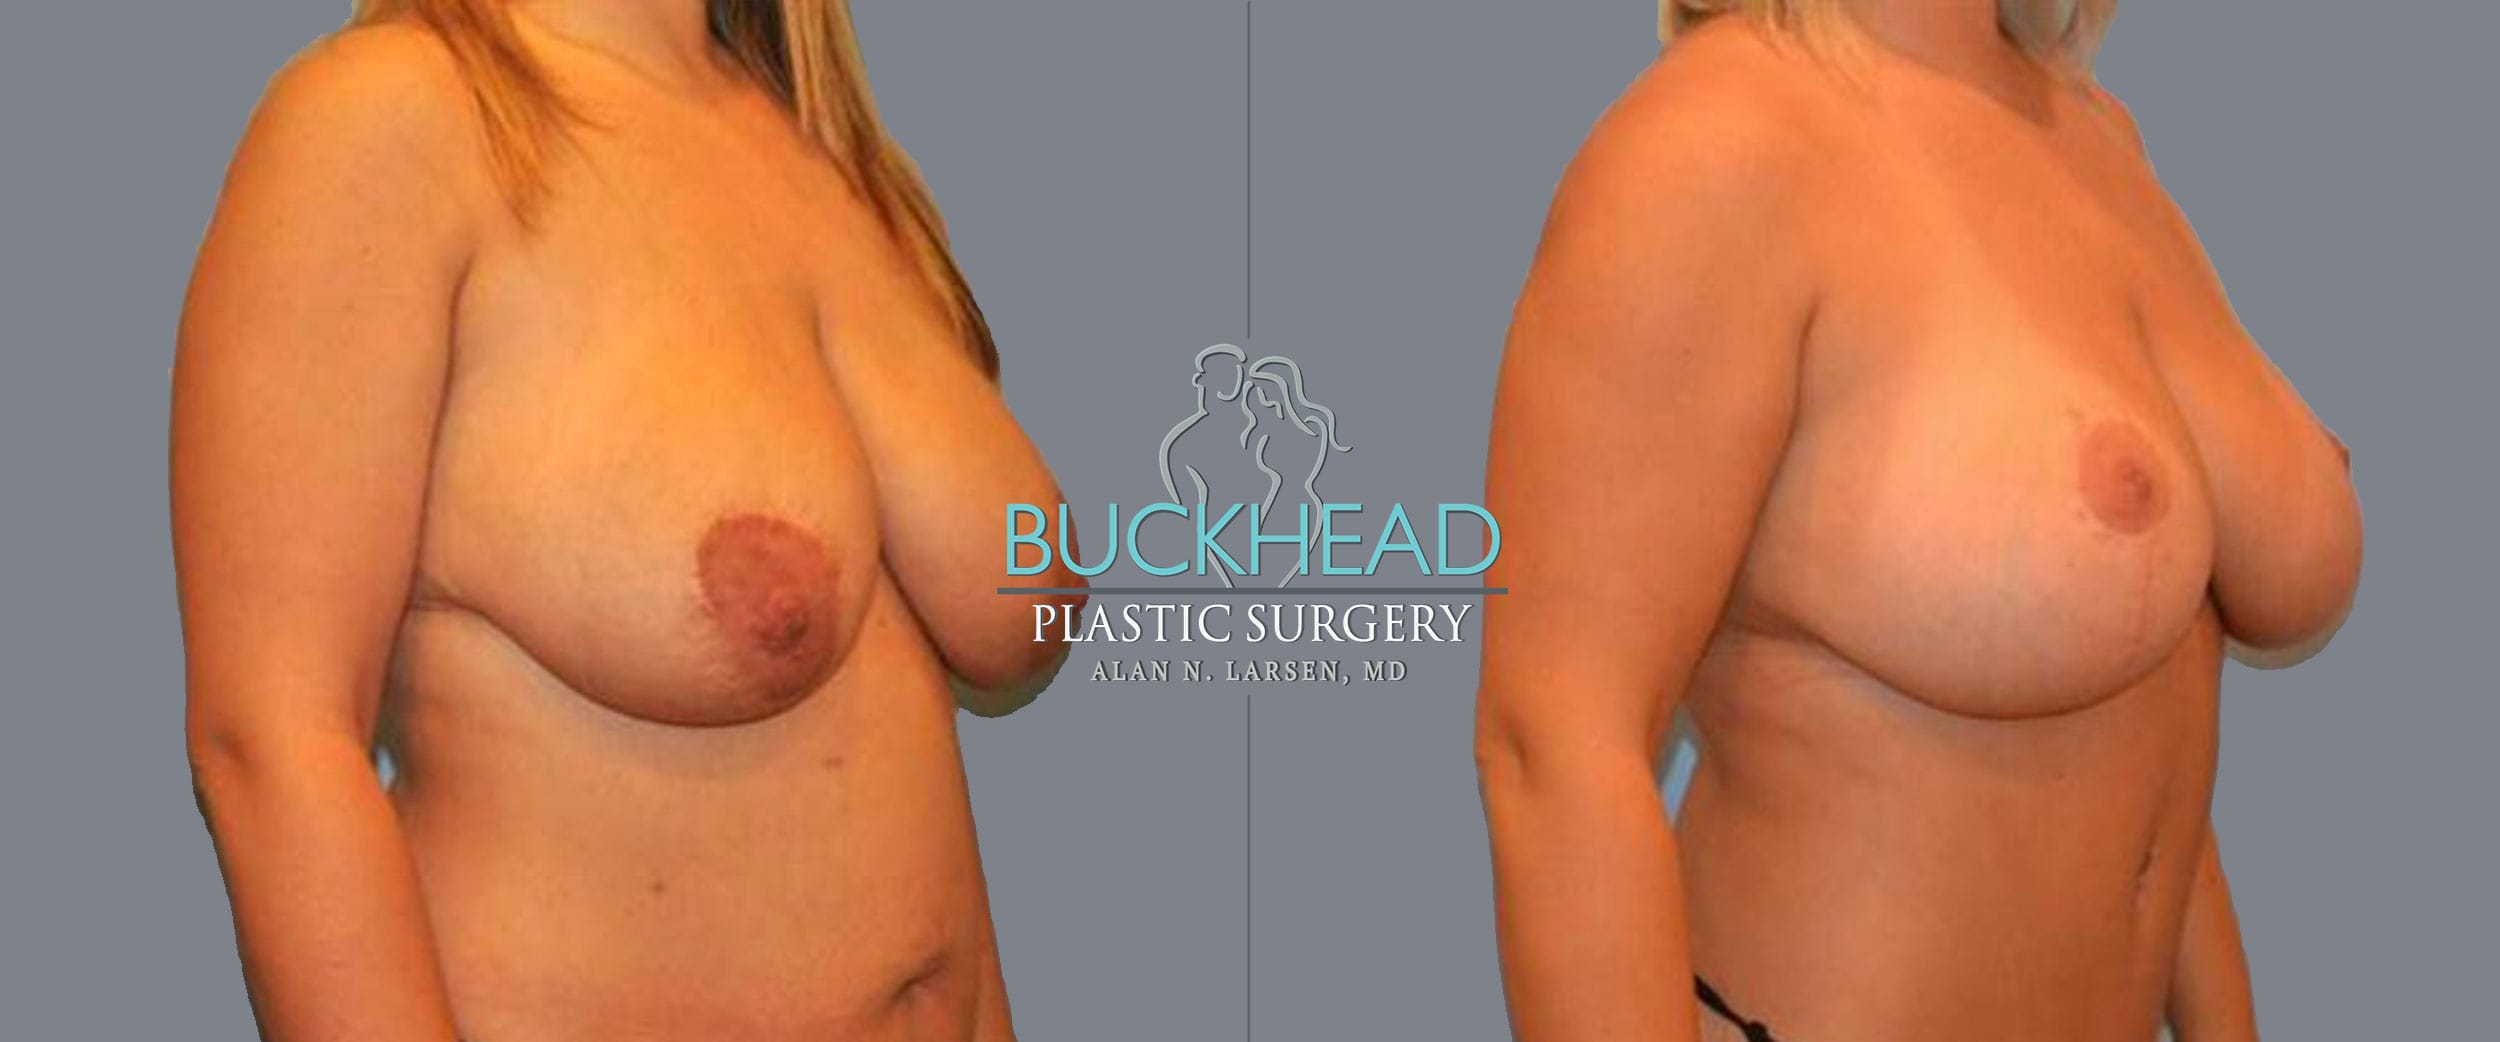 Before and After Photo Gallery | Breast Lift | Buckhead Plastic Surgery | Alan N. Larsen, MD | Board-Certified Plastic Surgeon | Atlanta GA